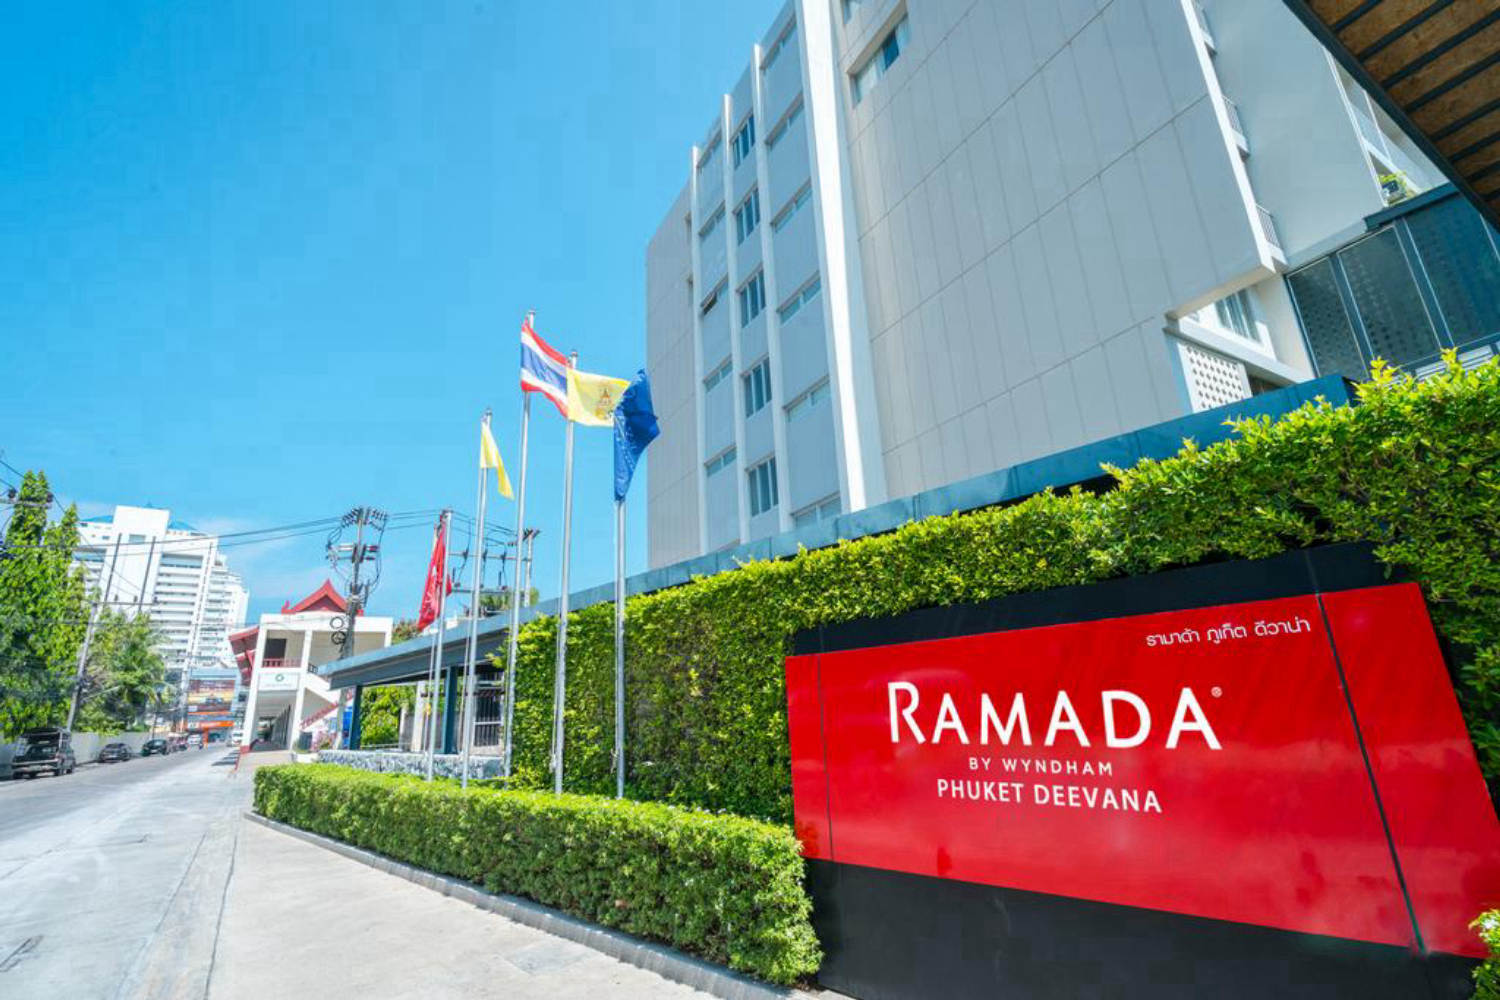 Ramada By Wyndham Phuket Deevana Hotel - Image 1